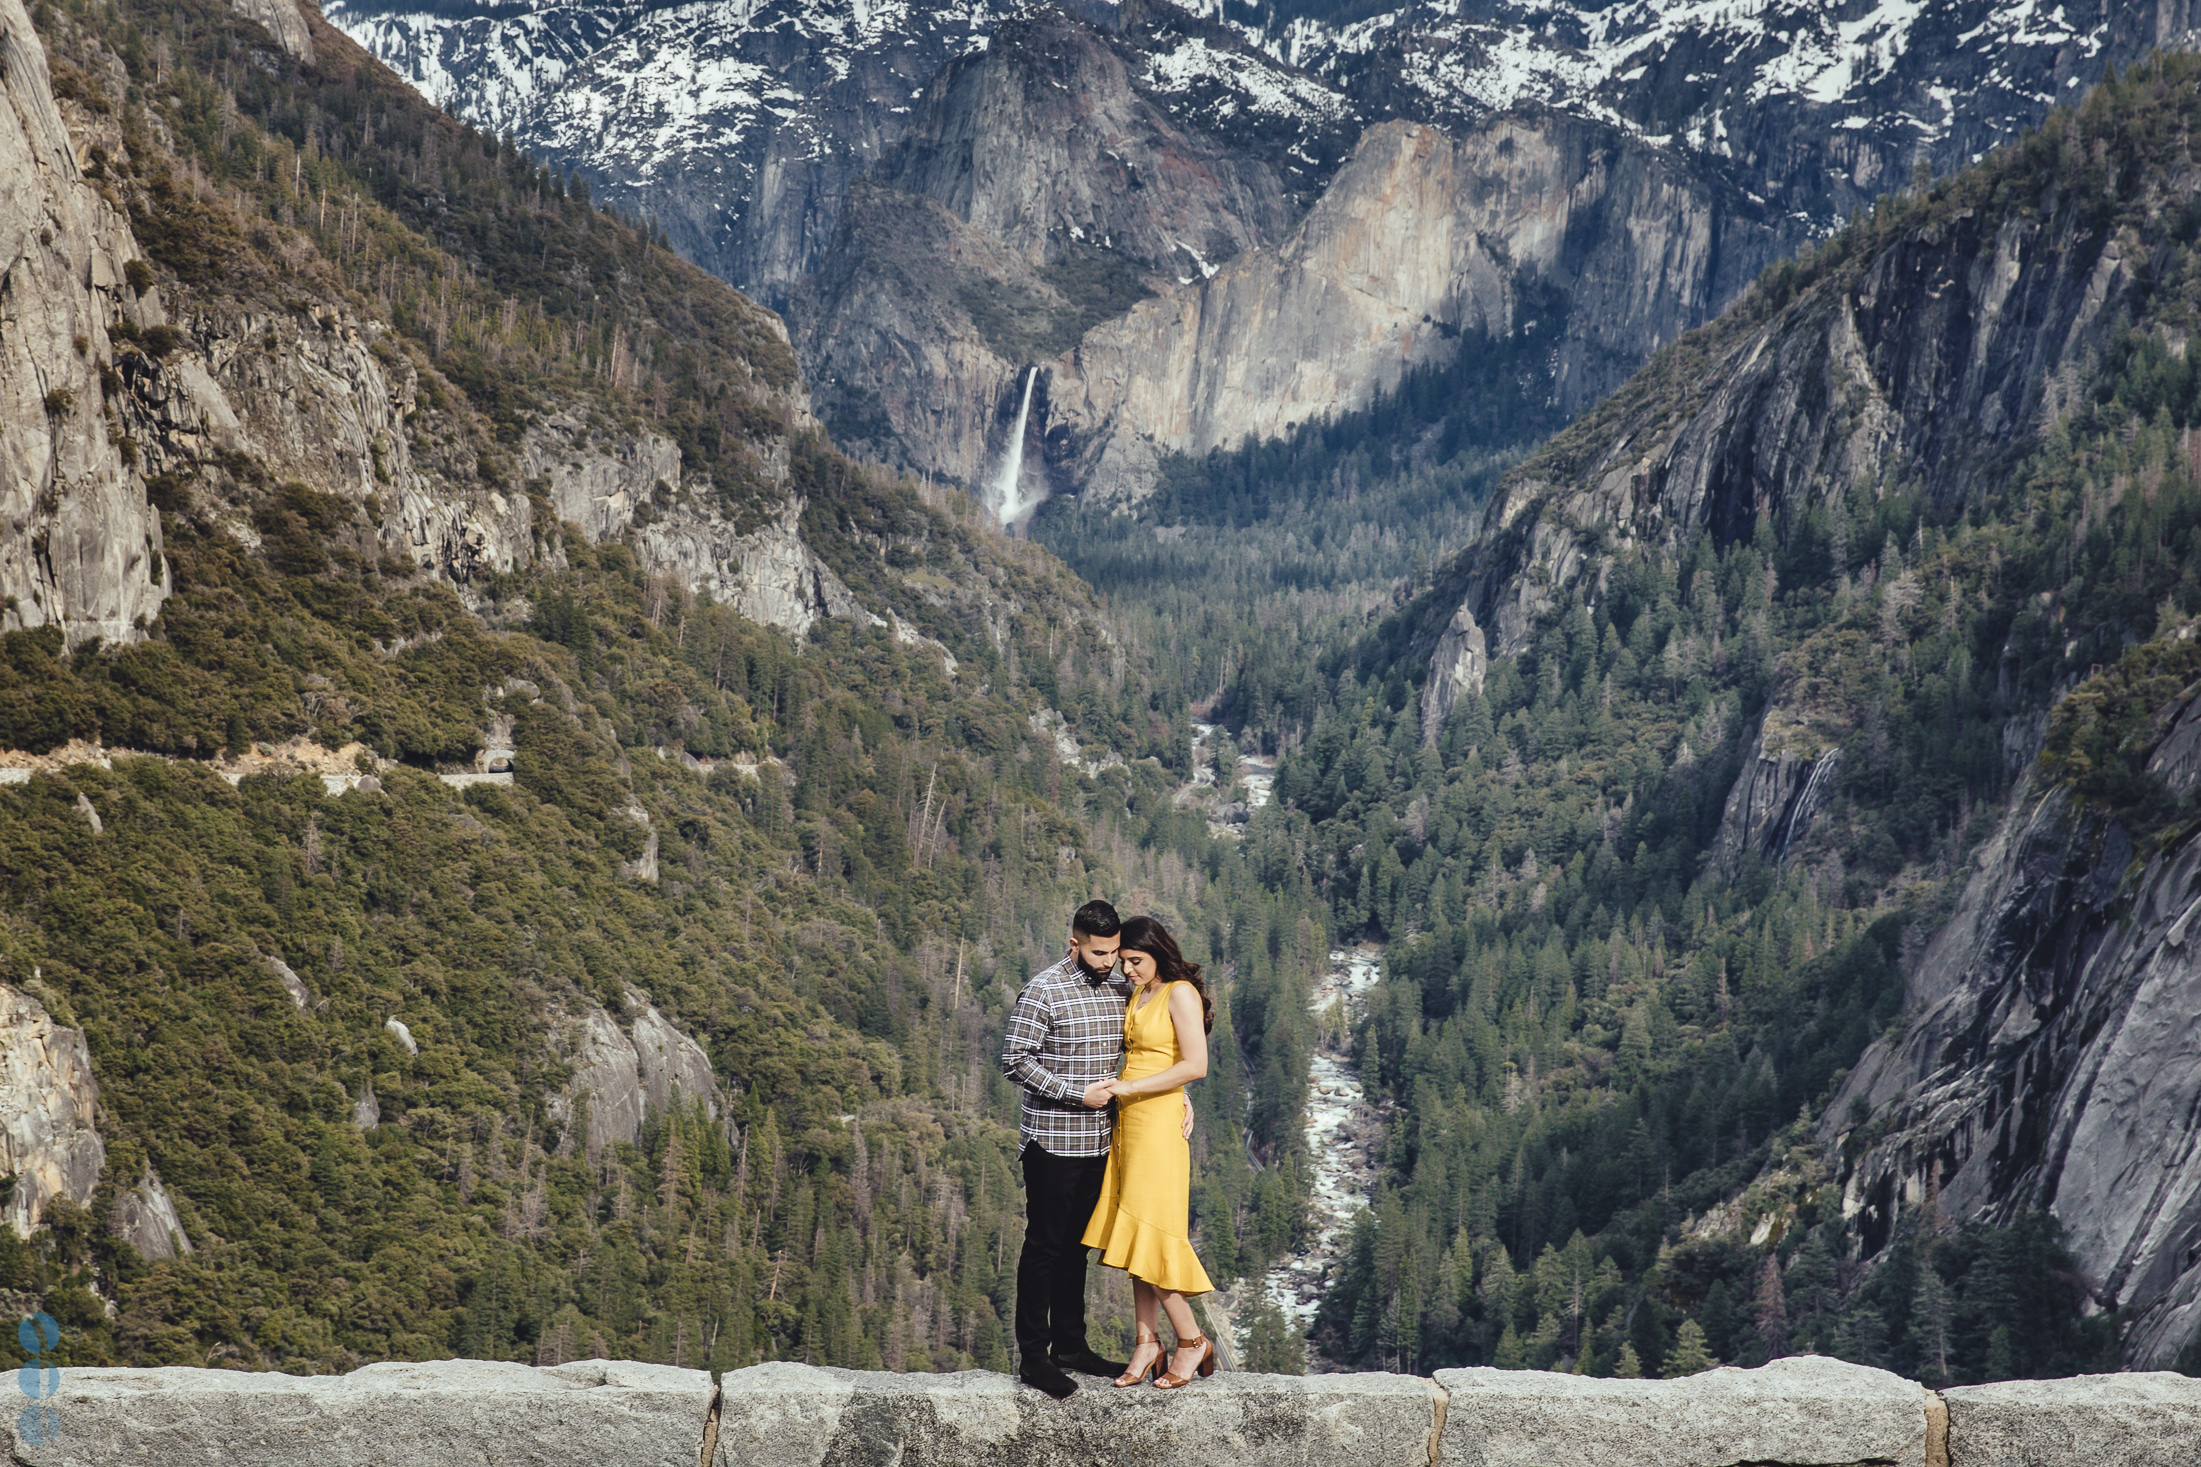 Yosemite Valley Engagement photography - Amit and Veena